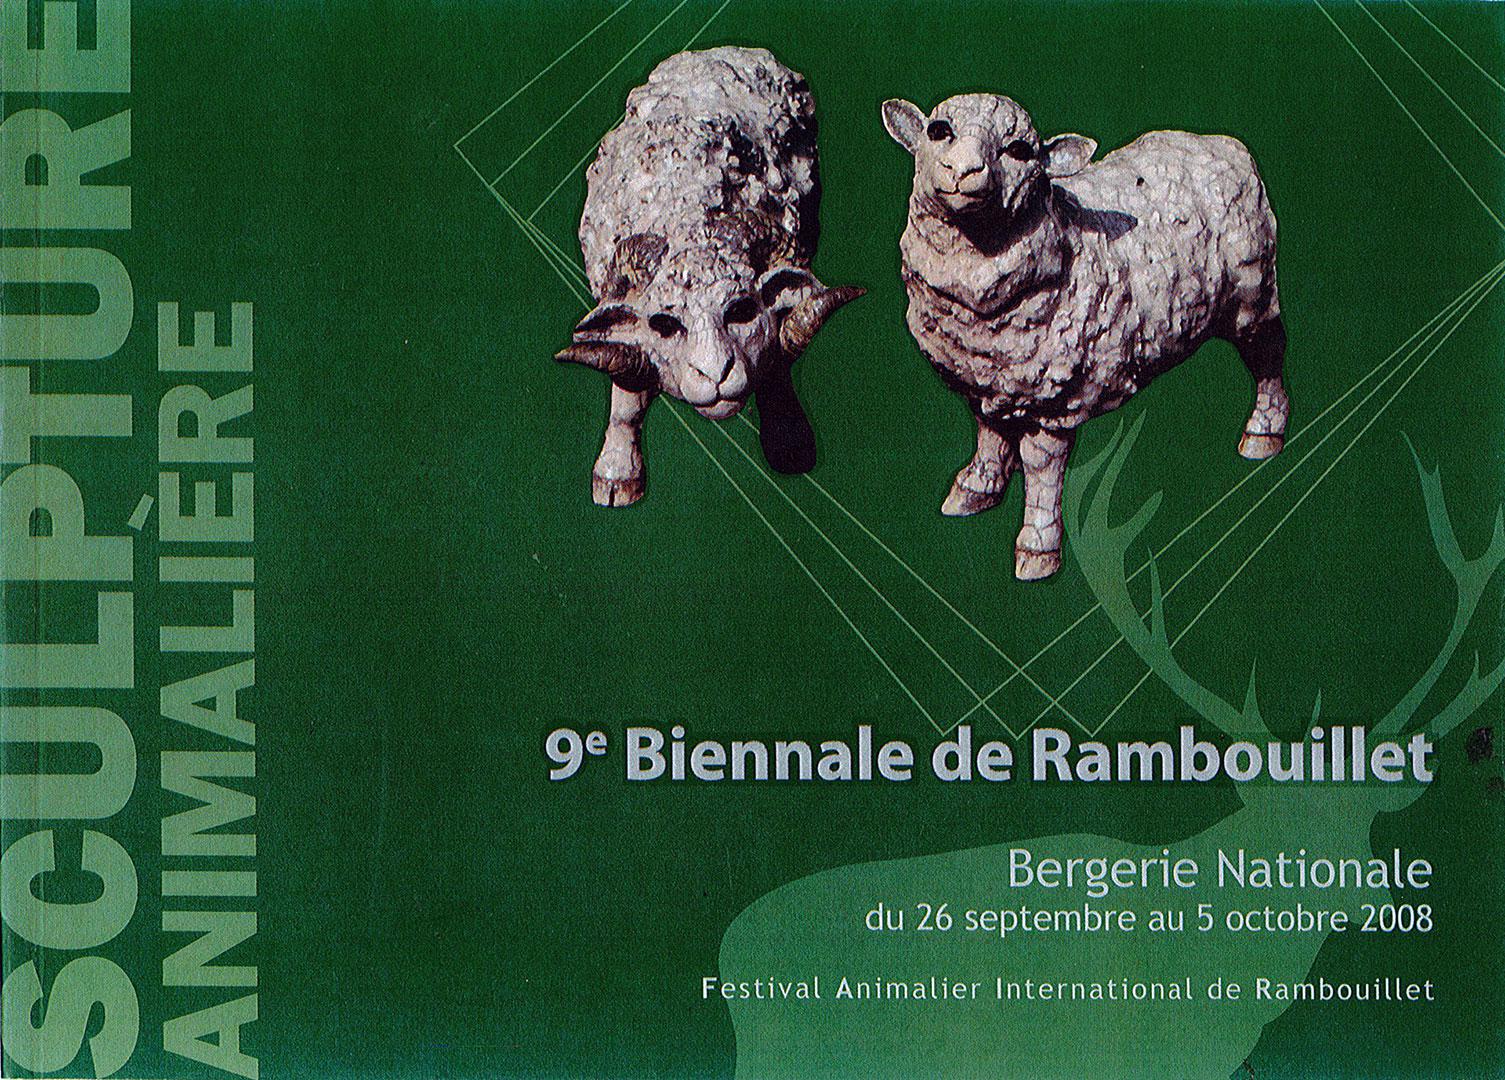 Festival Animalier Internationnal de Rambouillet - September-october 2008